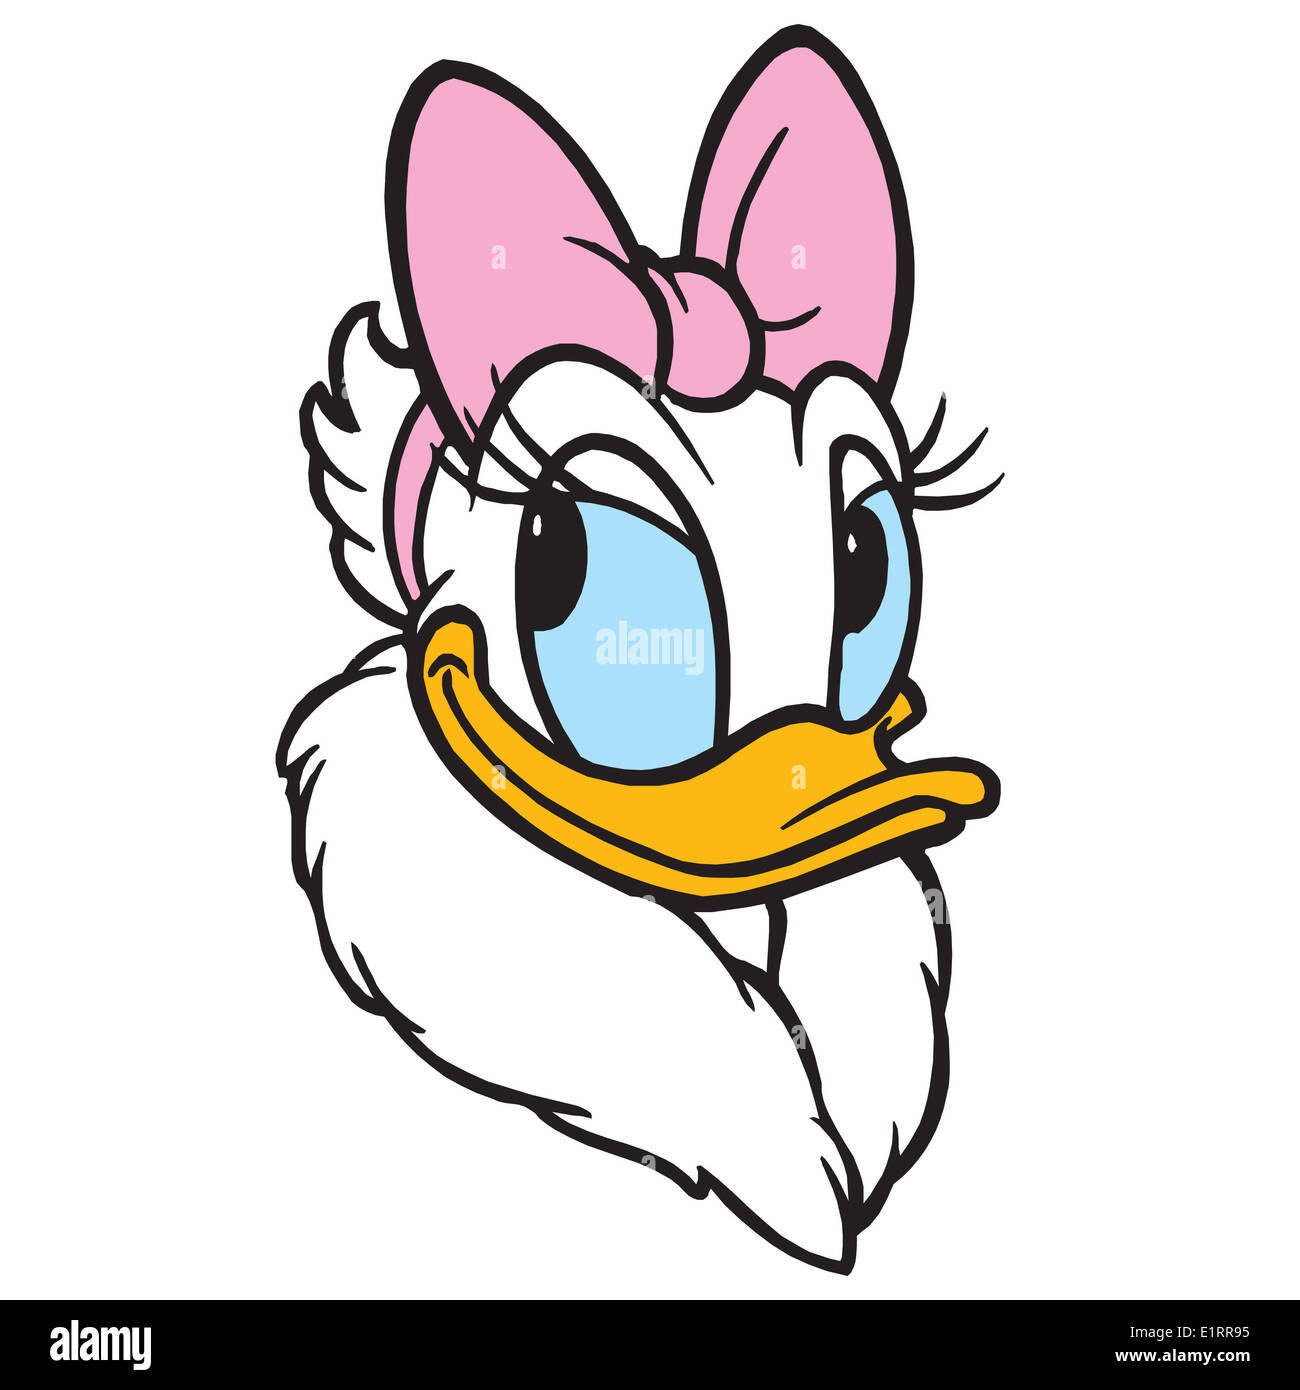 Daisy duck vector illustration Stock Photo - Alamy